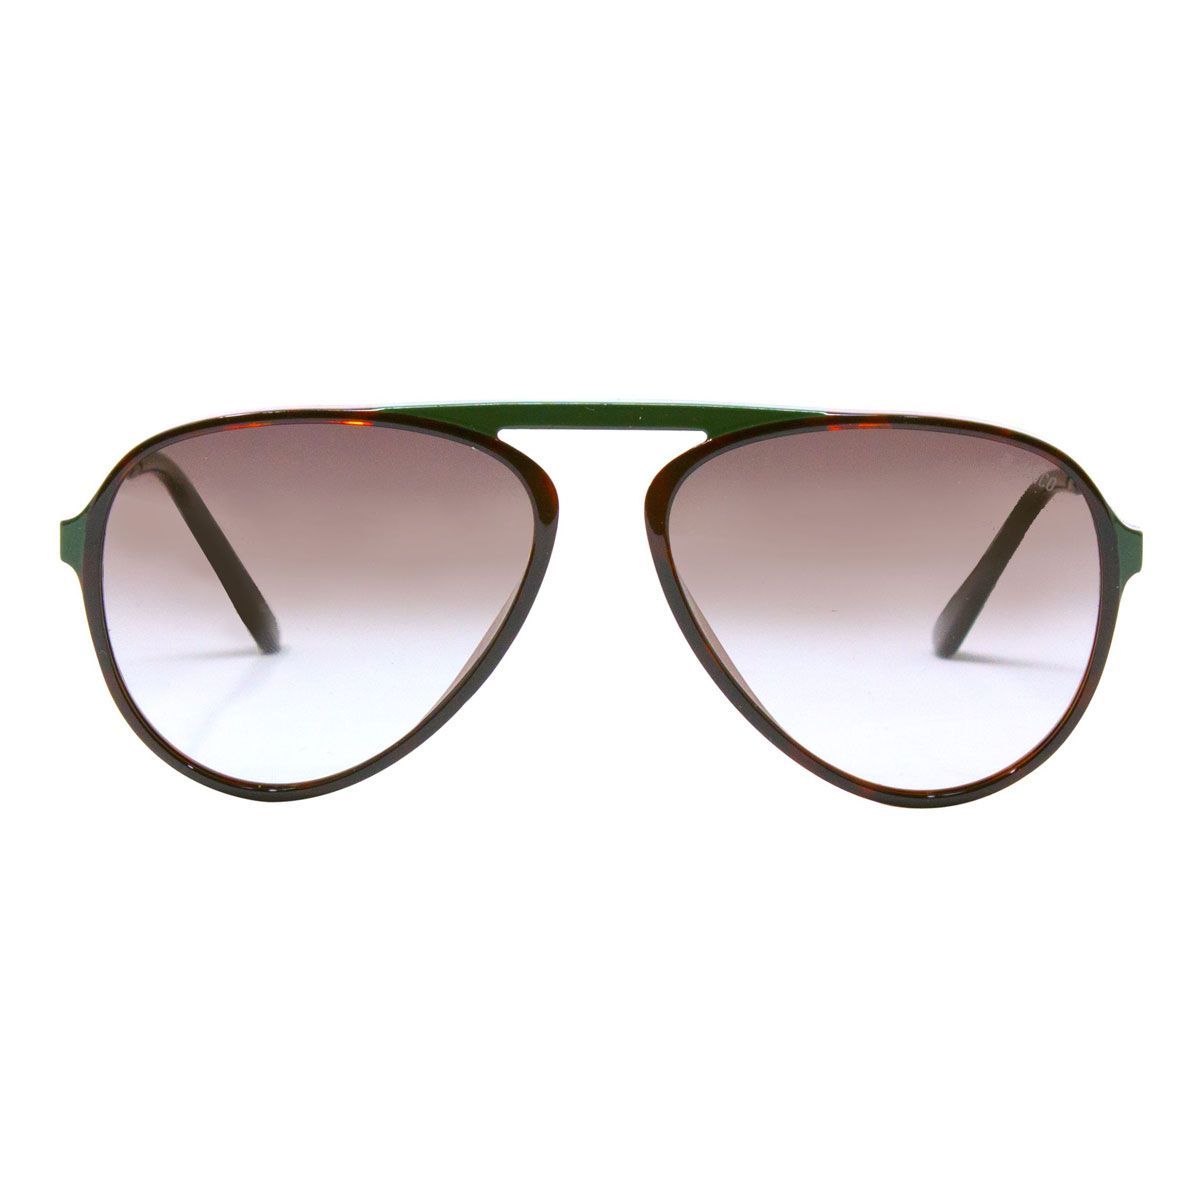 Enrico Green Polycarbonate Aviator Czar Unisex Sunglasses